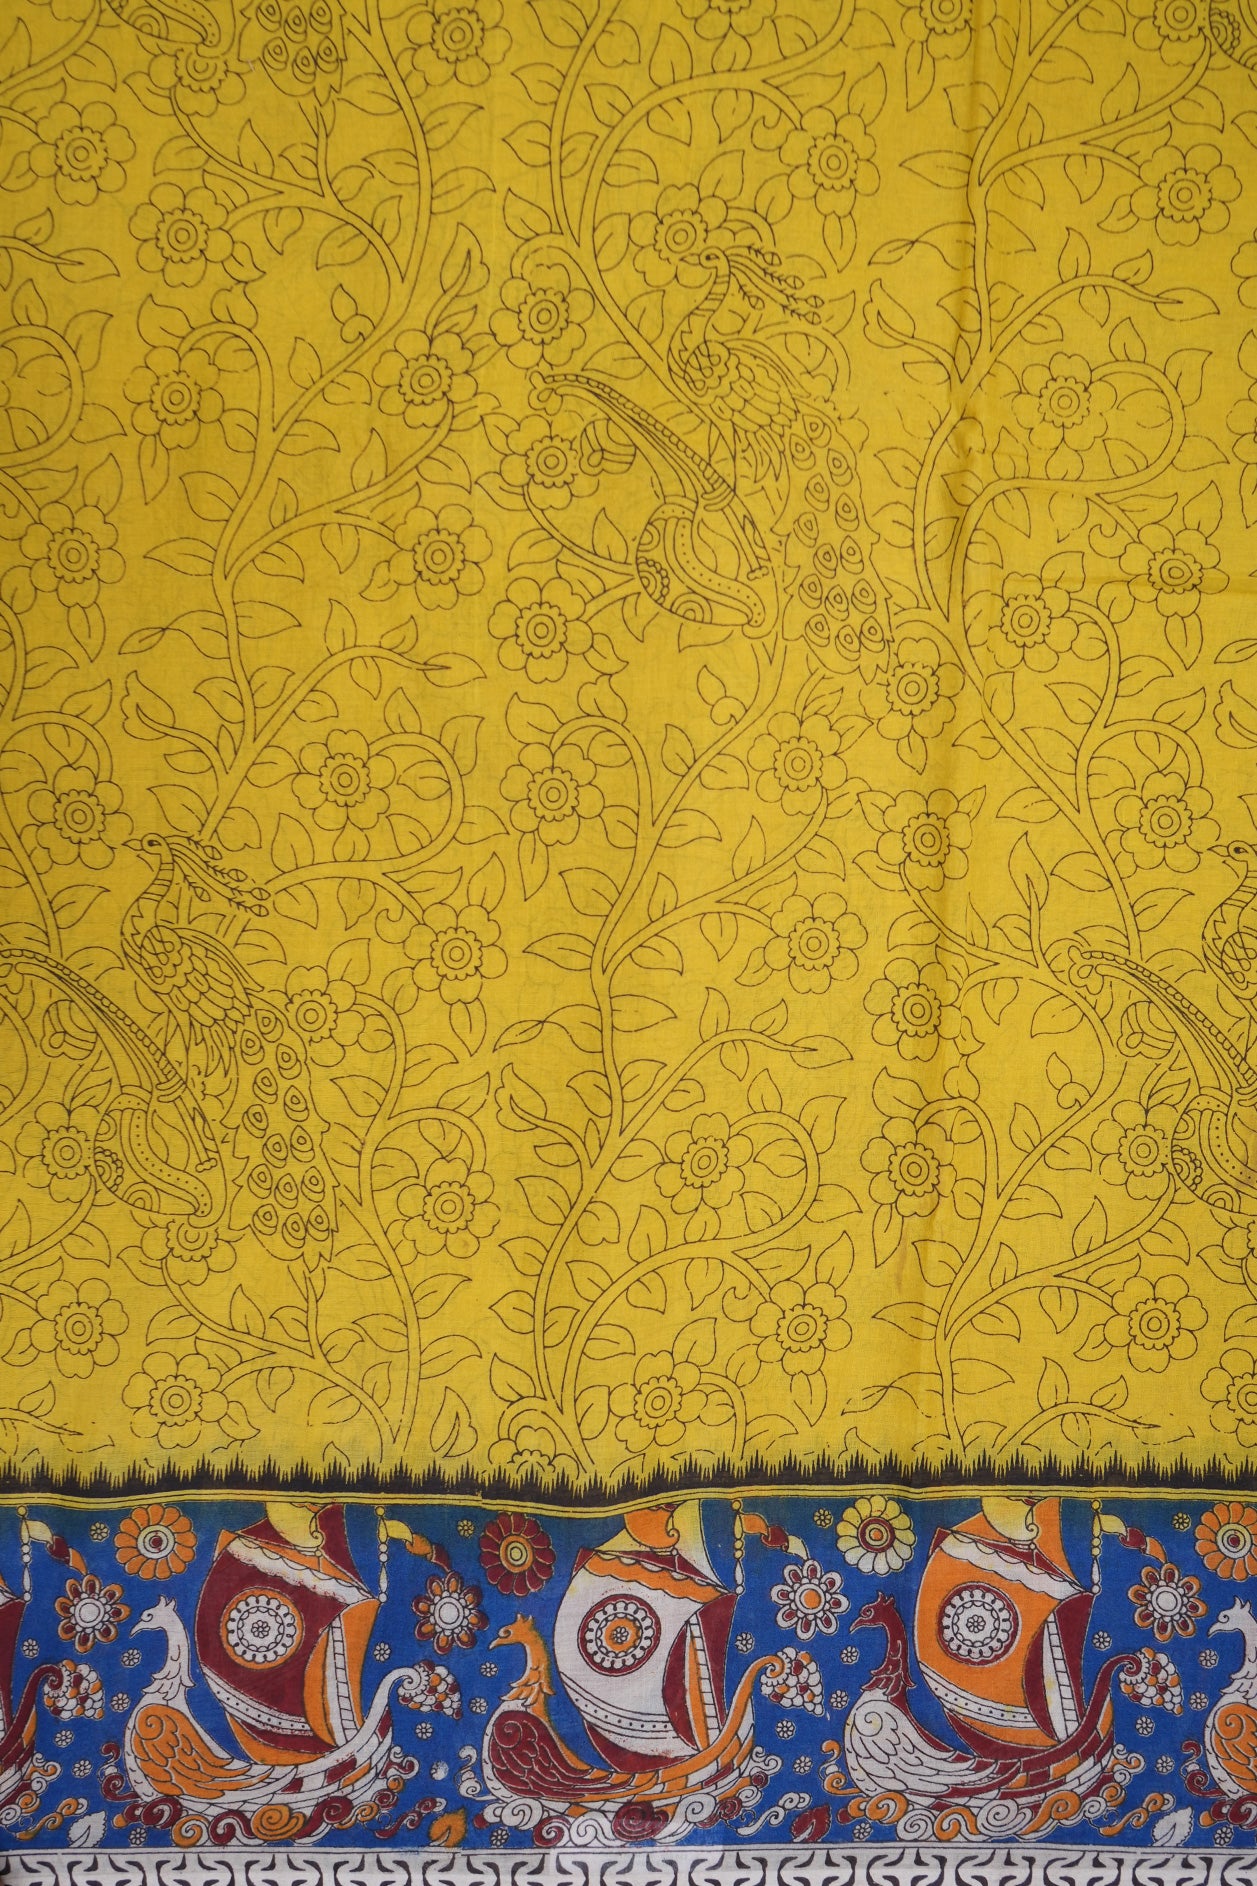 Allover Peacock And Floral Design Lemon Yellow Printed Kalamkari Cotton Saree